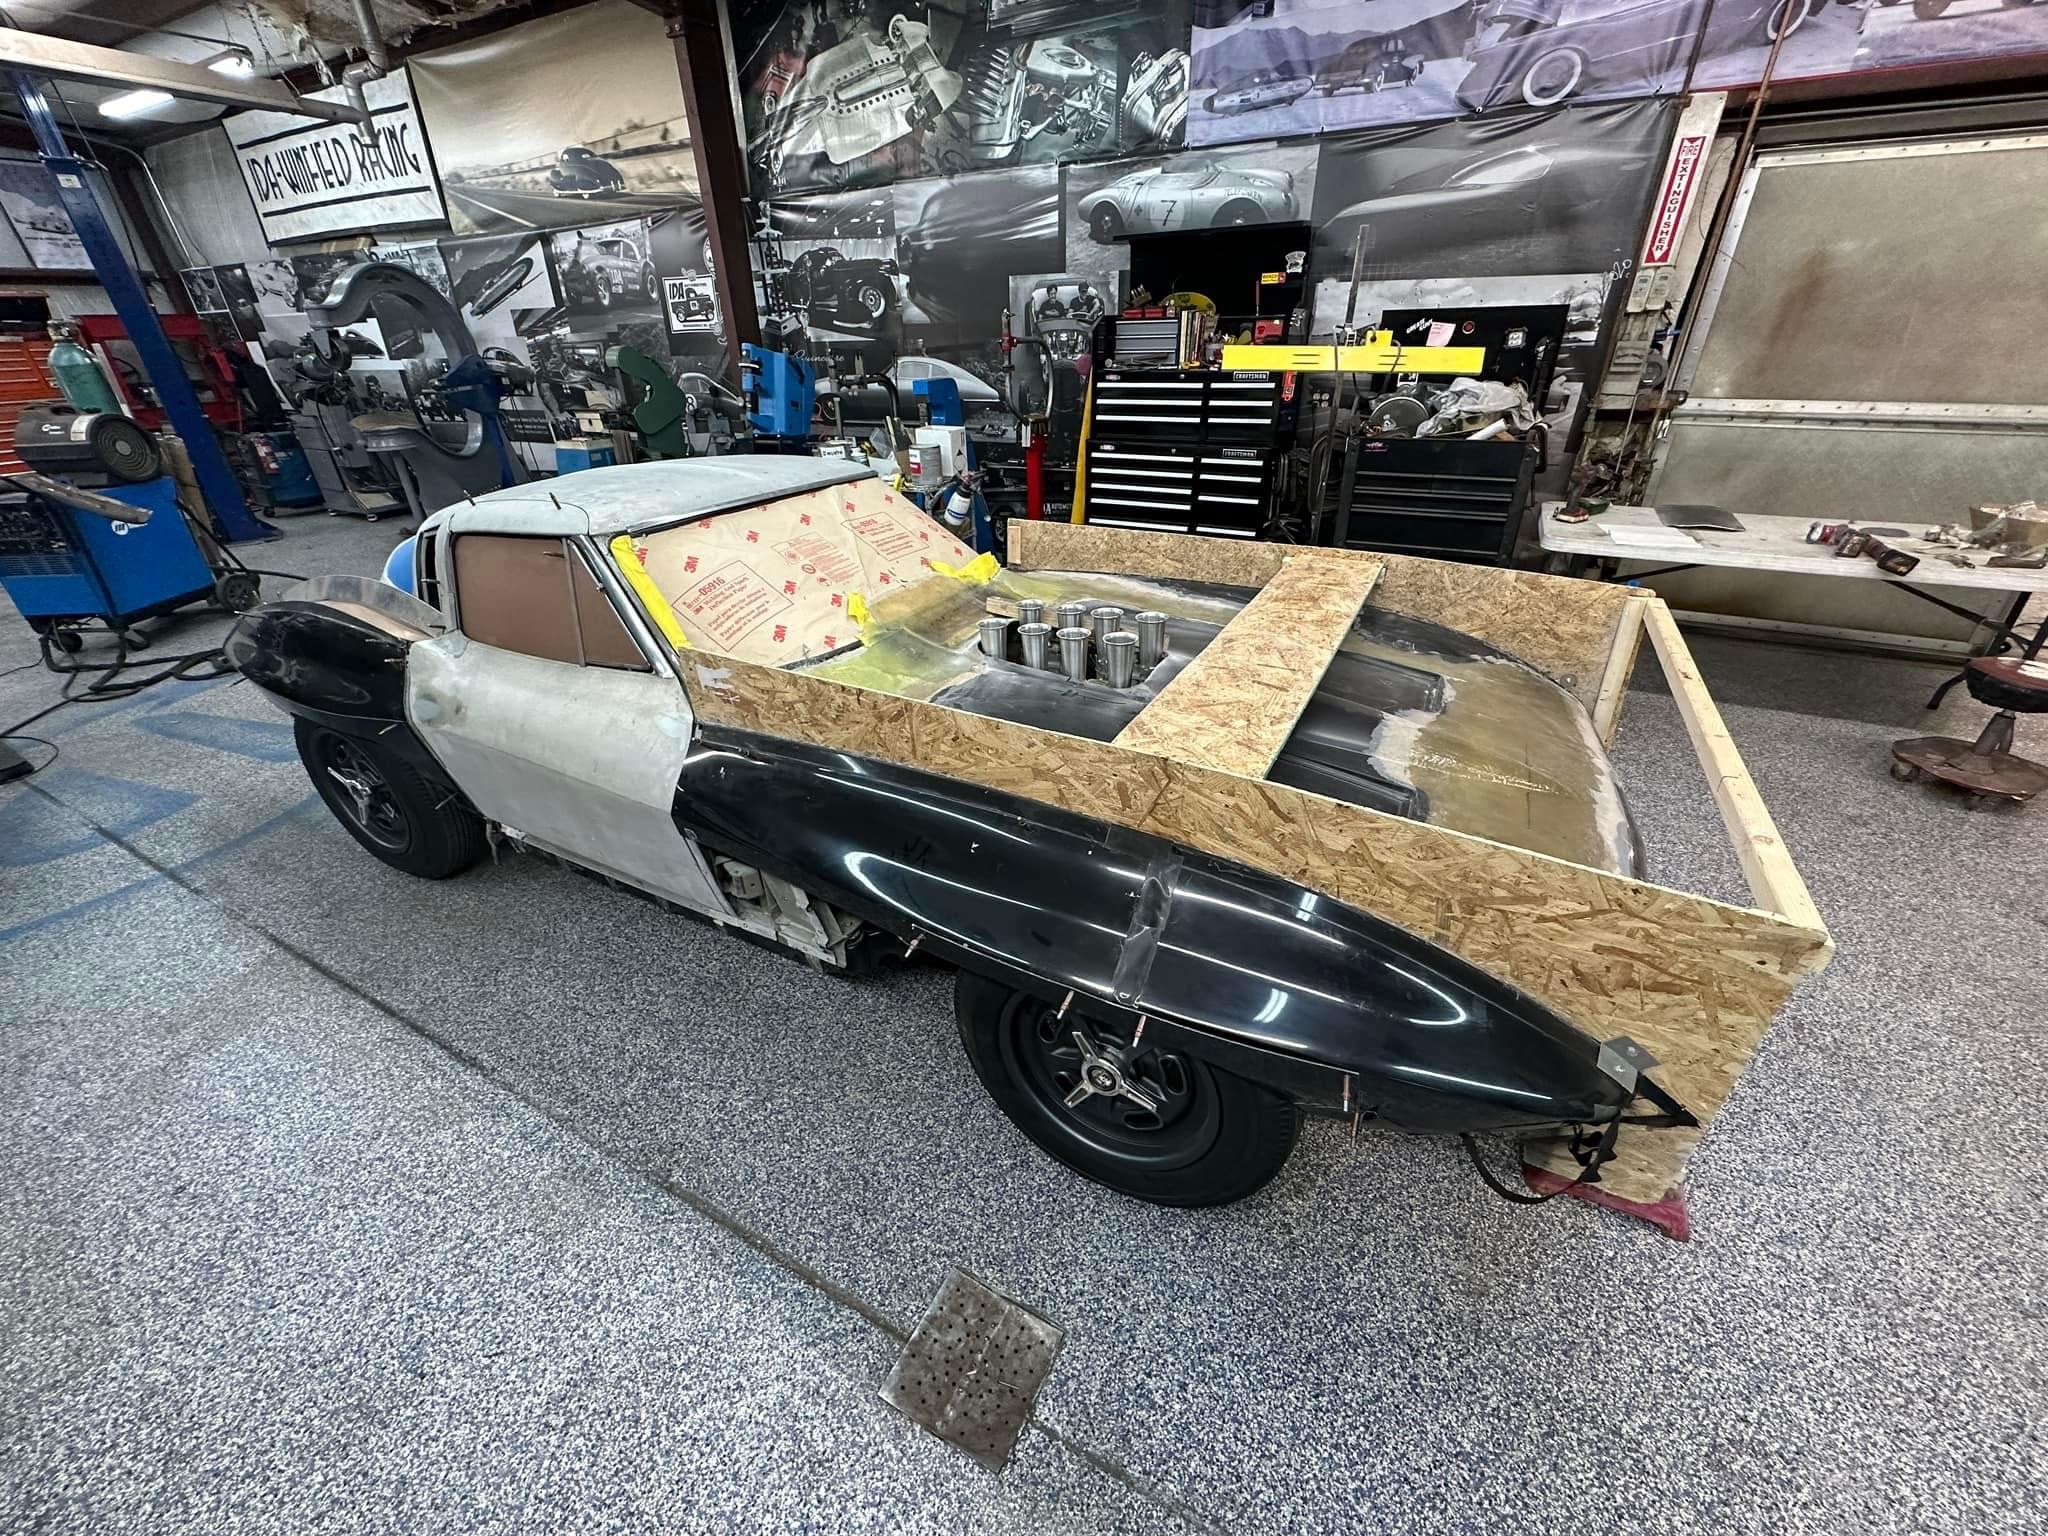 Black 1963 Corvette hood ready to get scanned